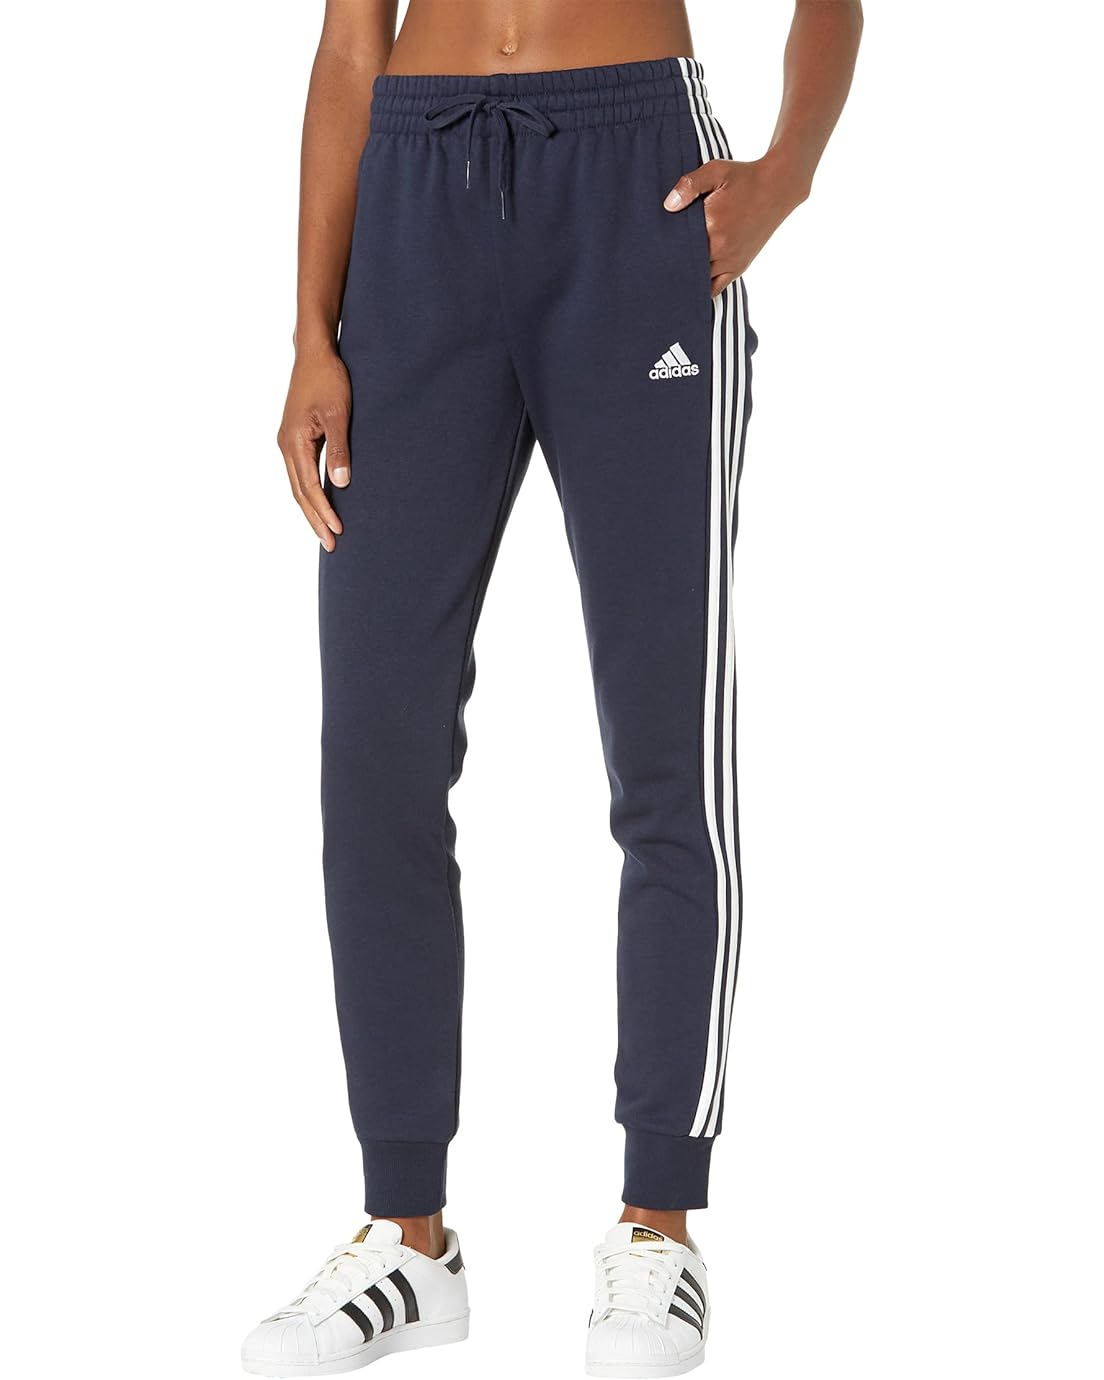 Adidas 3-Stripes Fleece Cuffed Pants